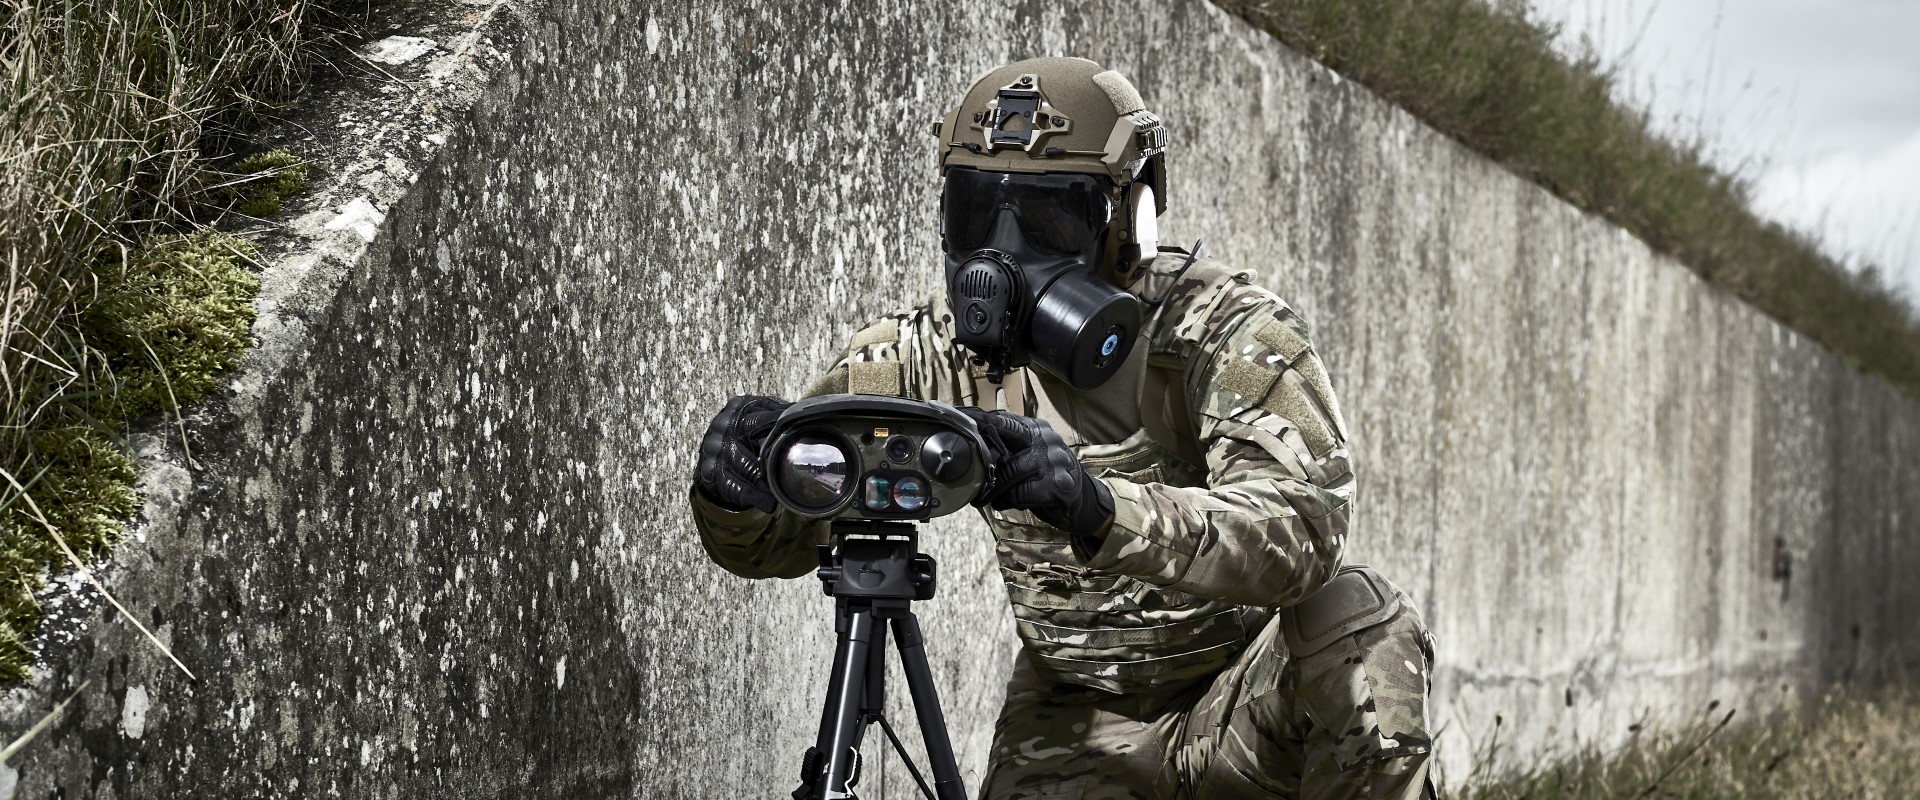 FM53 Respirator Tactical Gas Mask | Avon Protection | Avon Protection